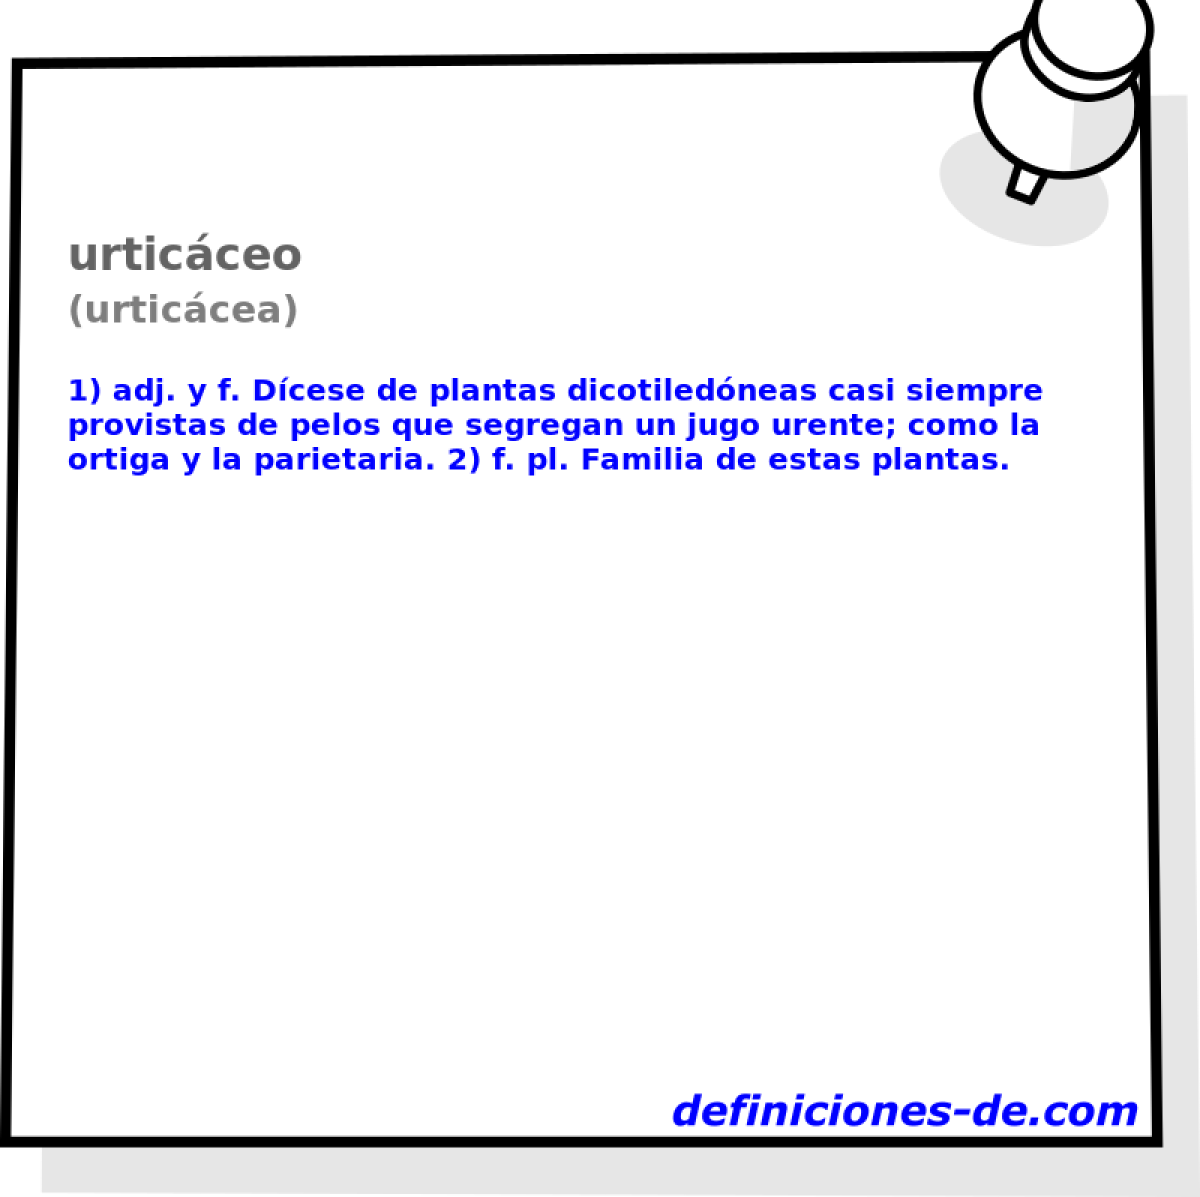 urticceo (urticcea)